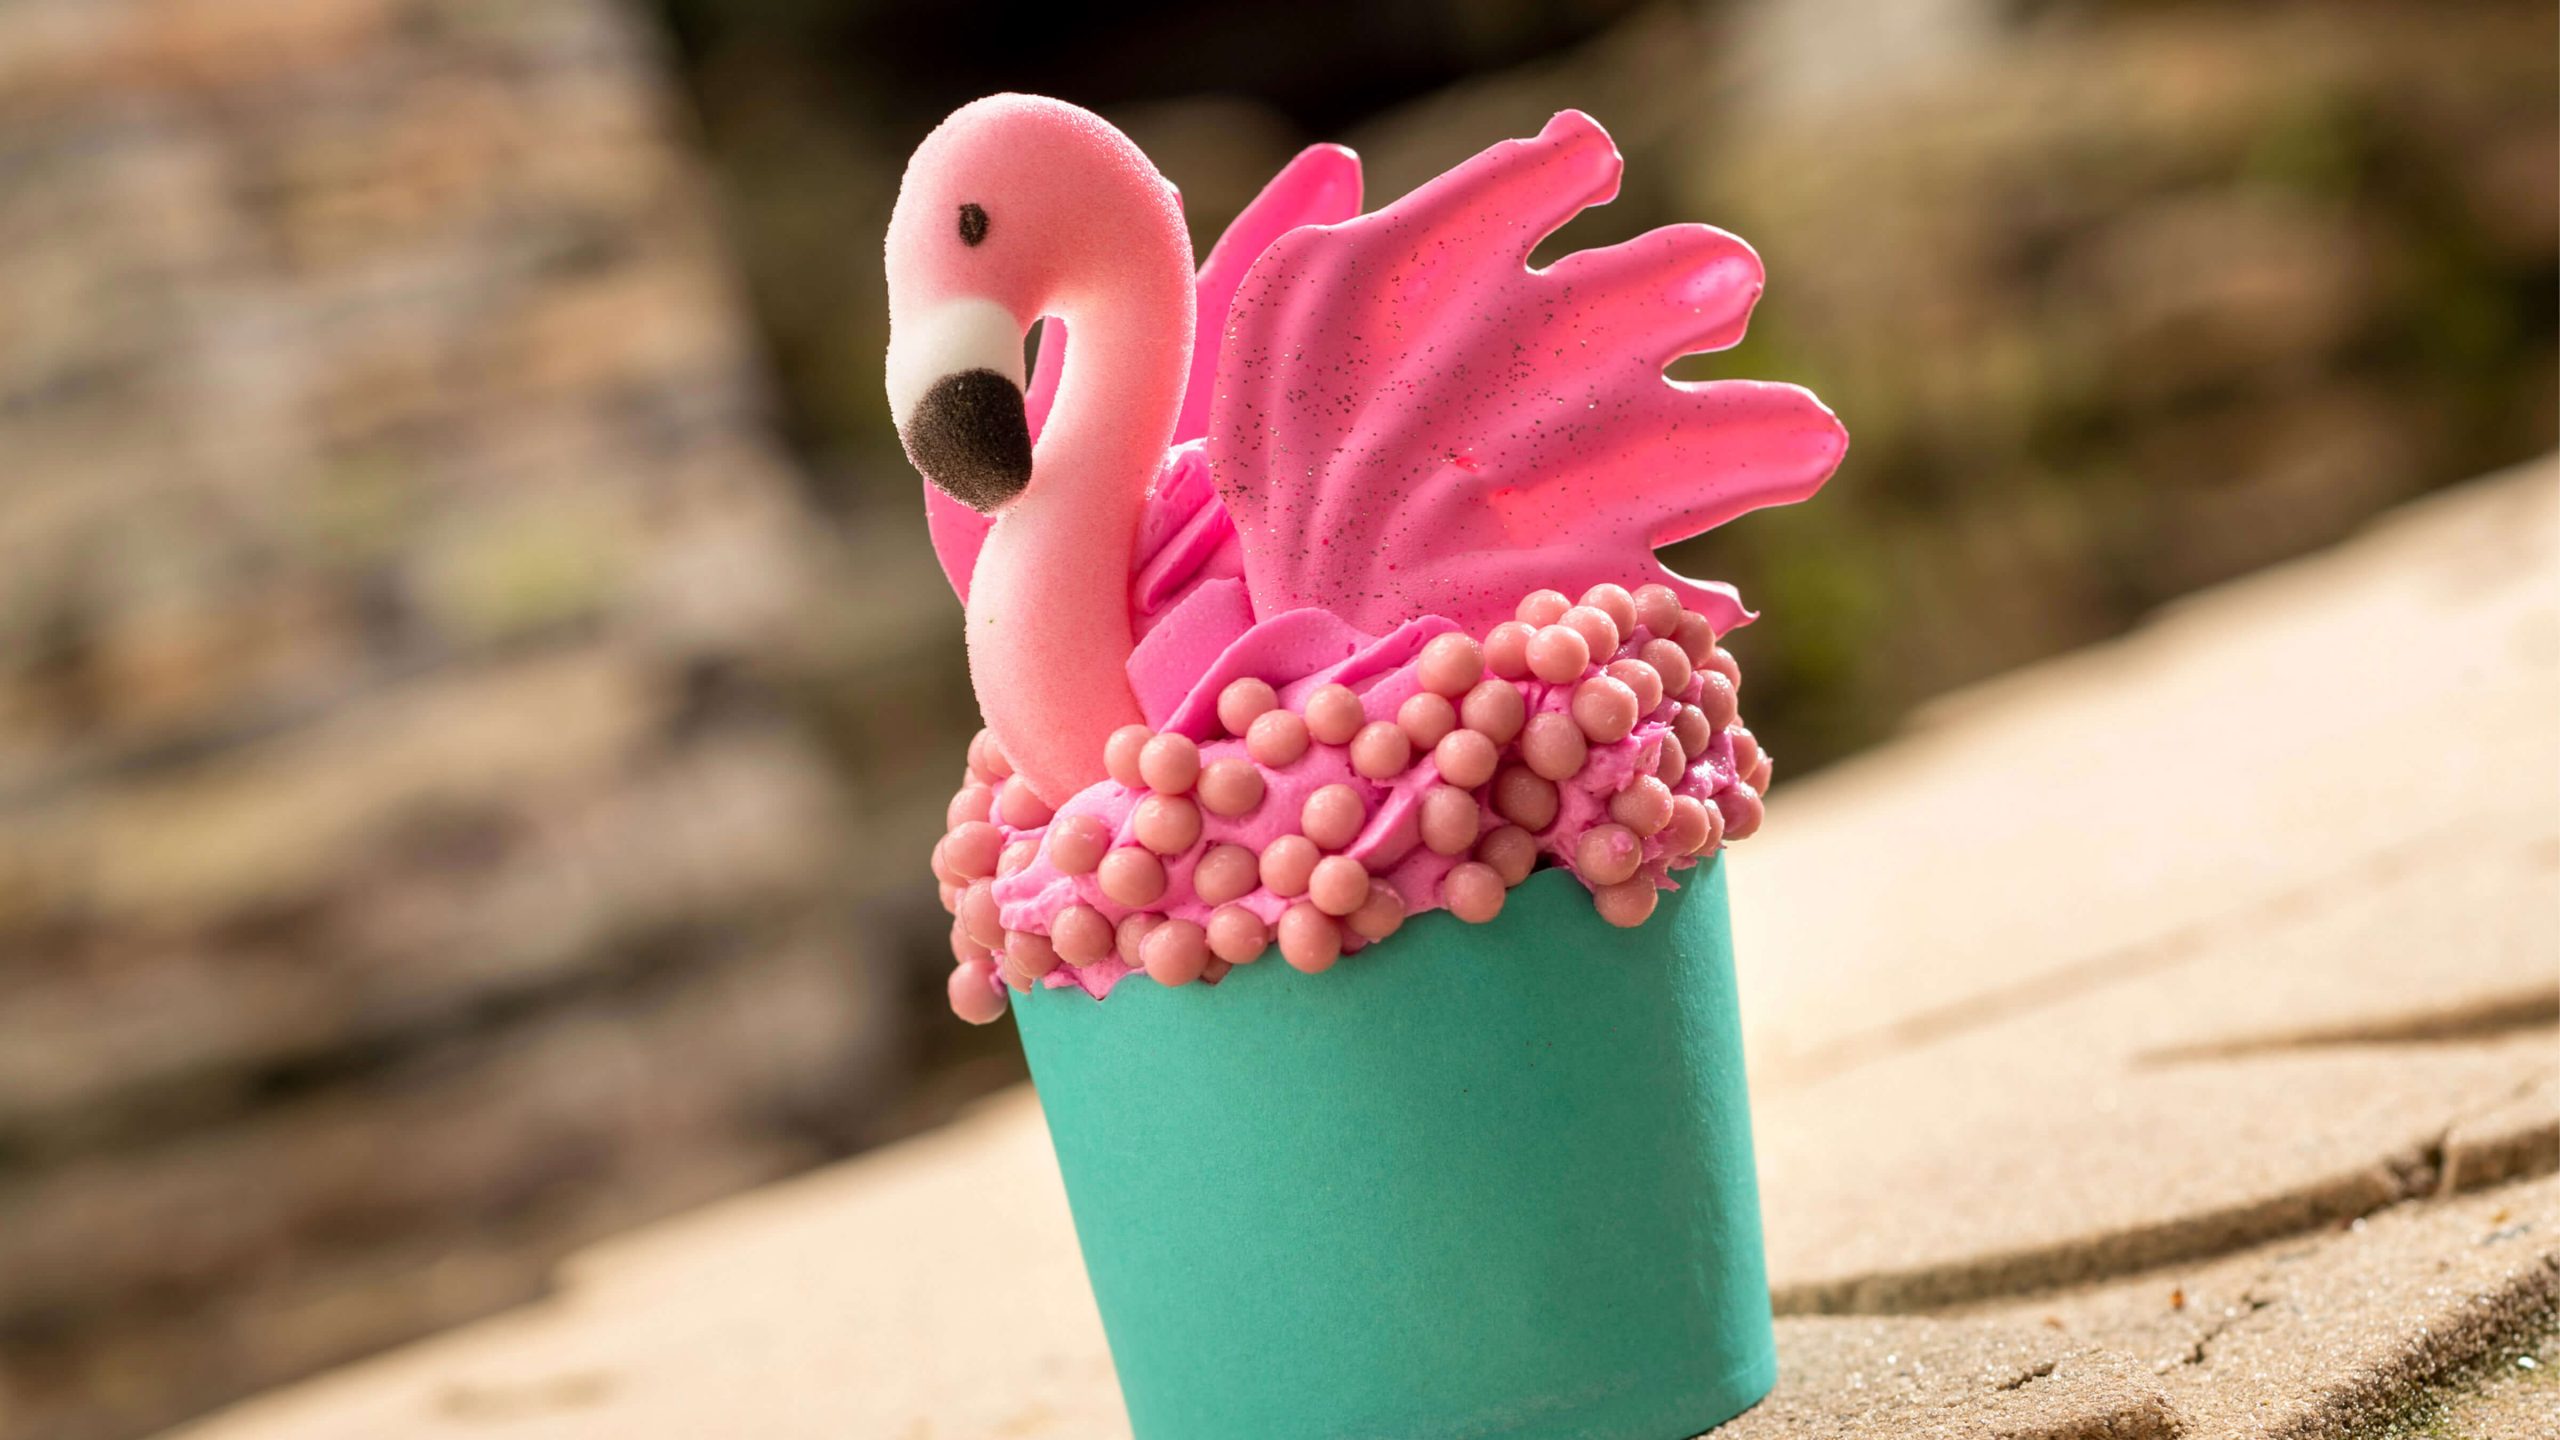 Flamingo cupcake for Earth Day at Disney's Animal Kingdom.